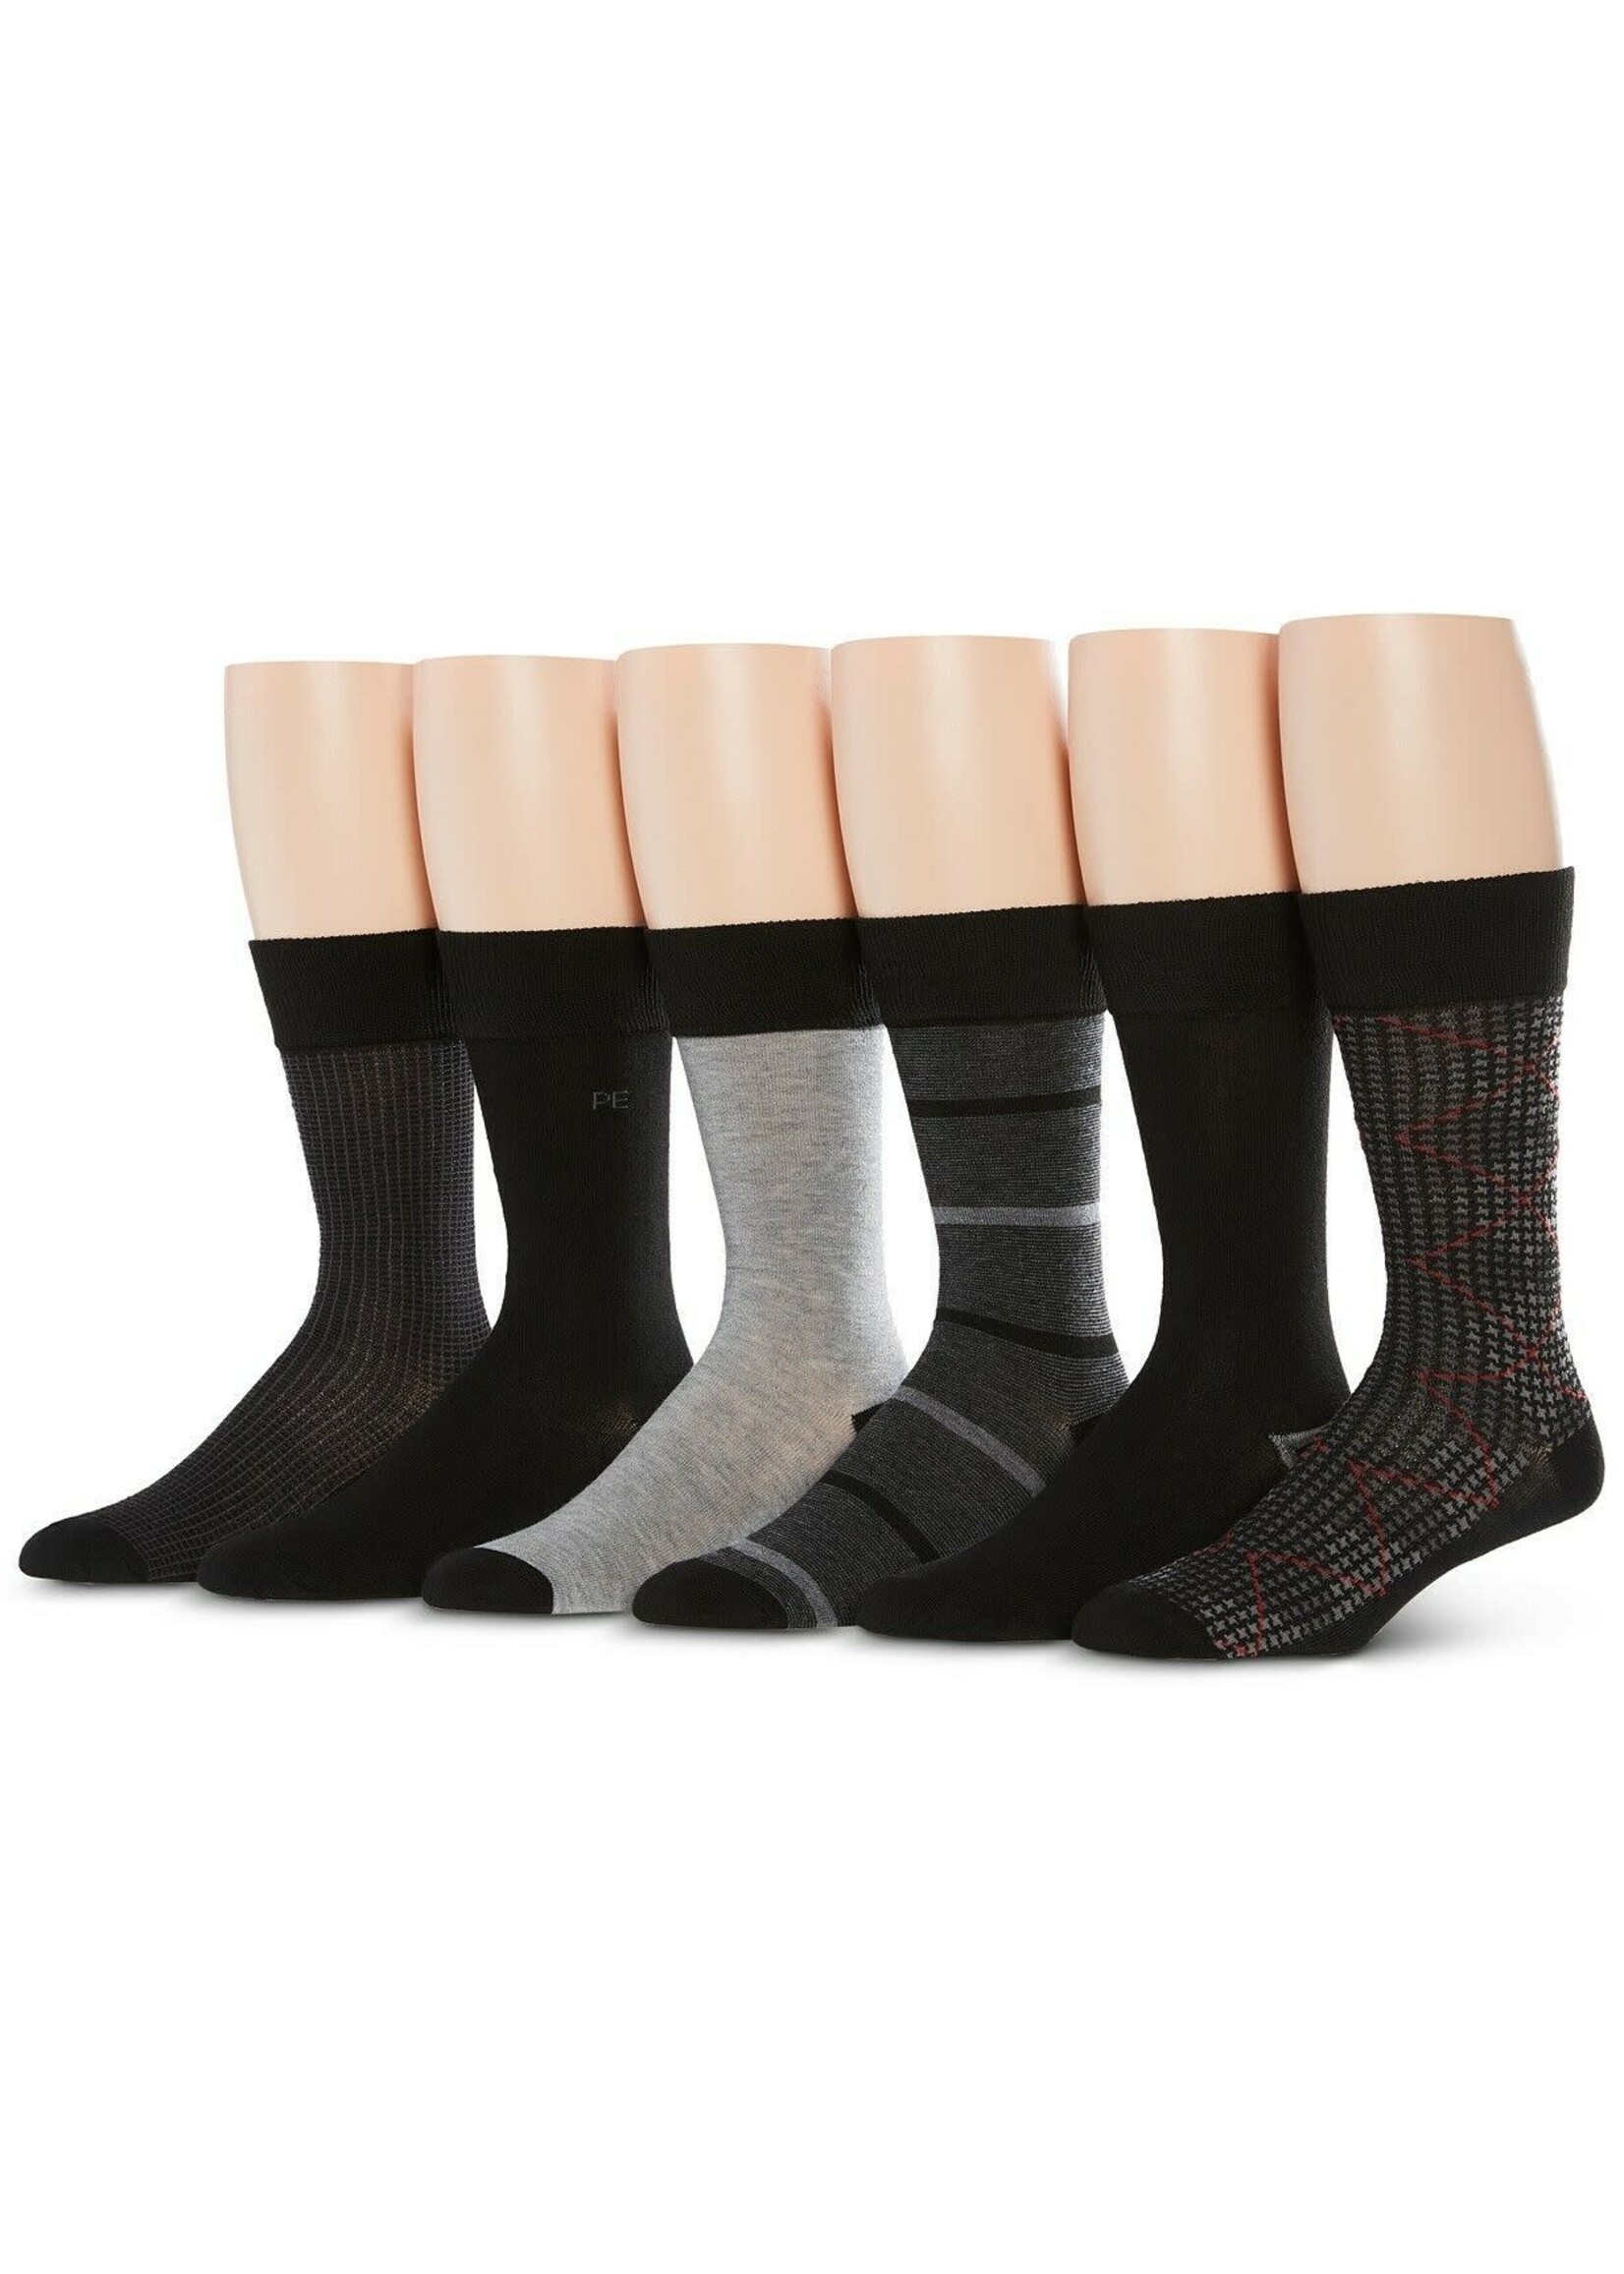 Perry Ellis Mens Dress Socks (6PK)